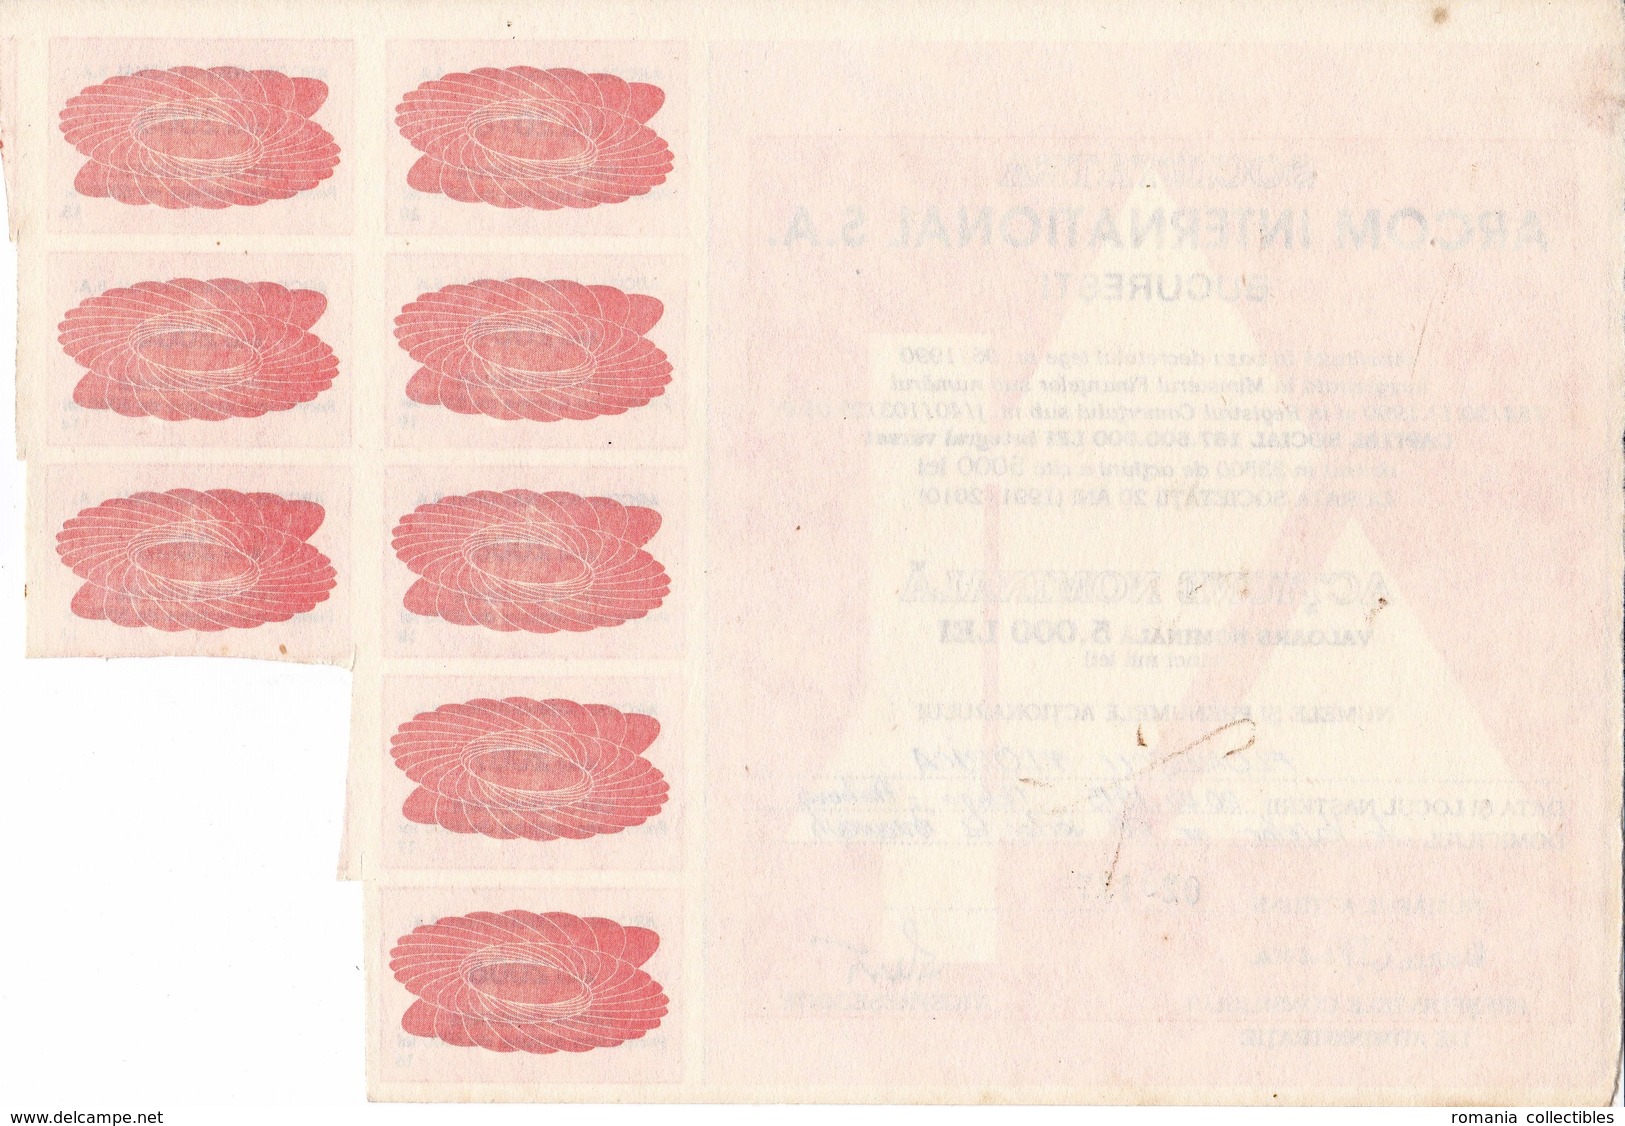 Romania, 1990's, Arcom International Company - Vintage Bond Certificate & Coupons, 5000 Lei - A - C